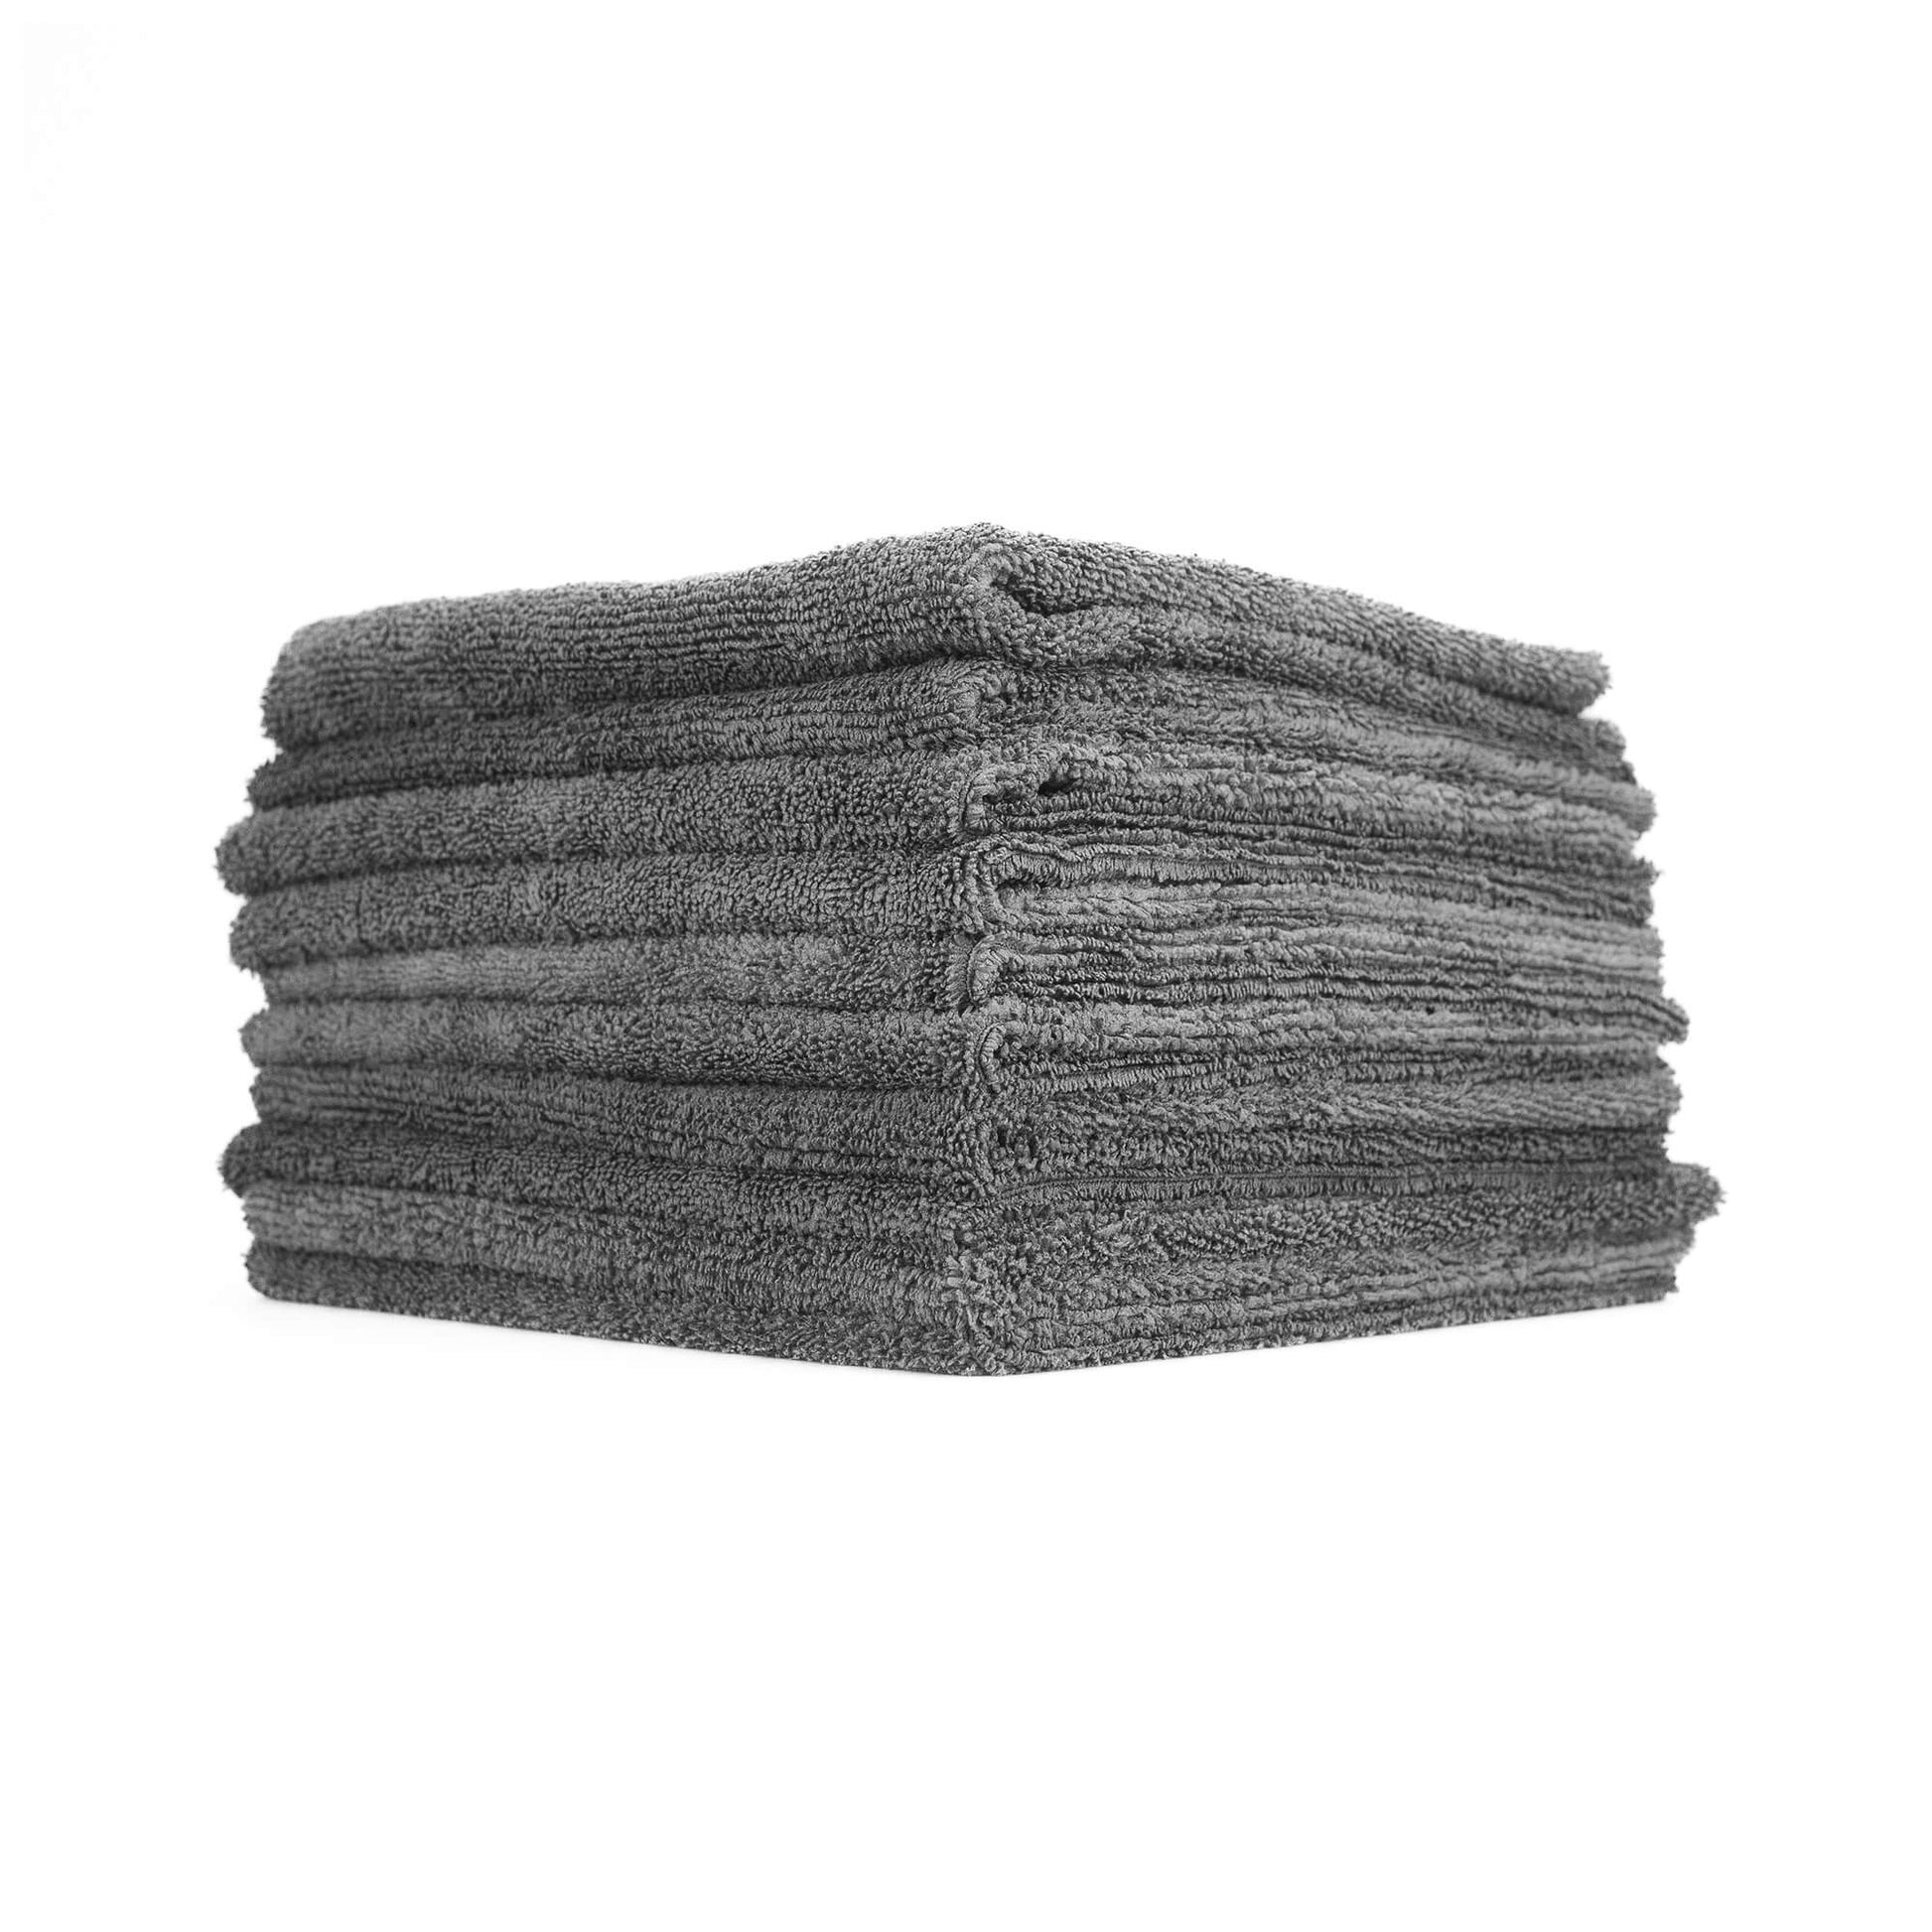 Edgeless 365 Premium Microfiber Terry Detailing Towel - 10 Pack Grey